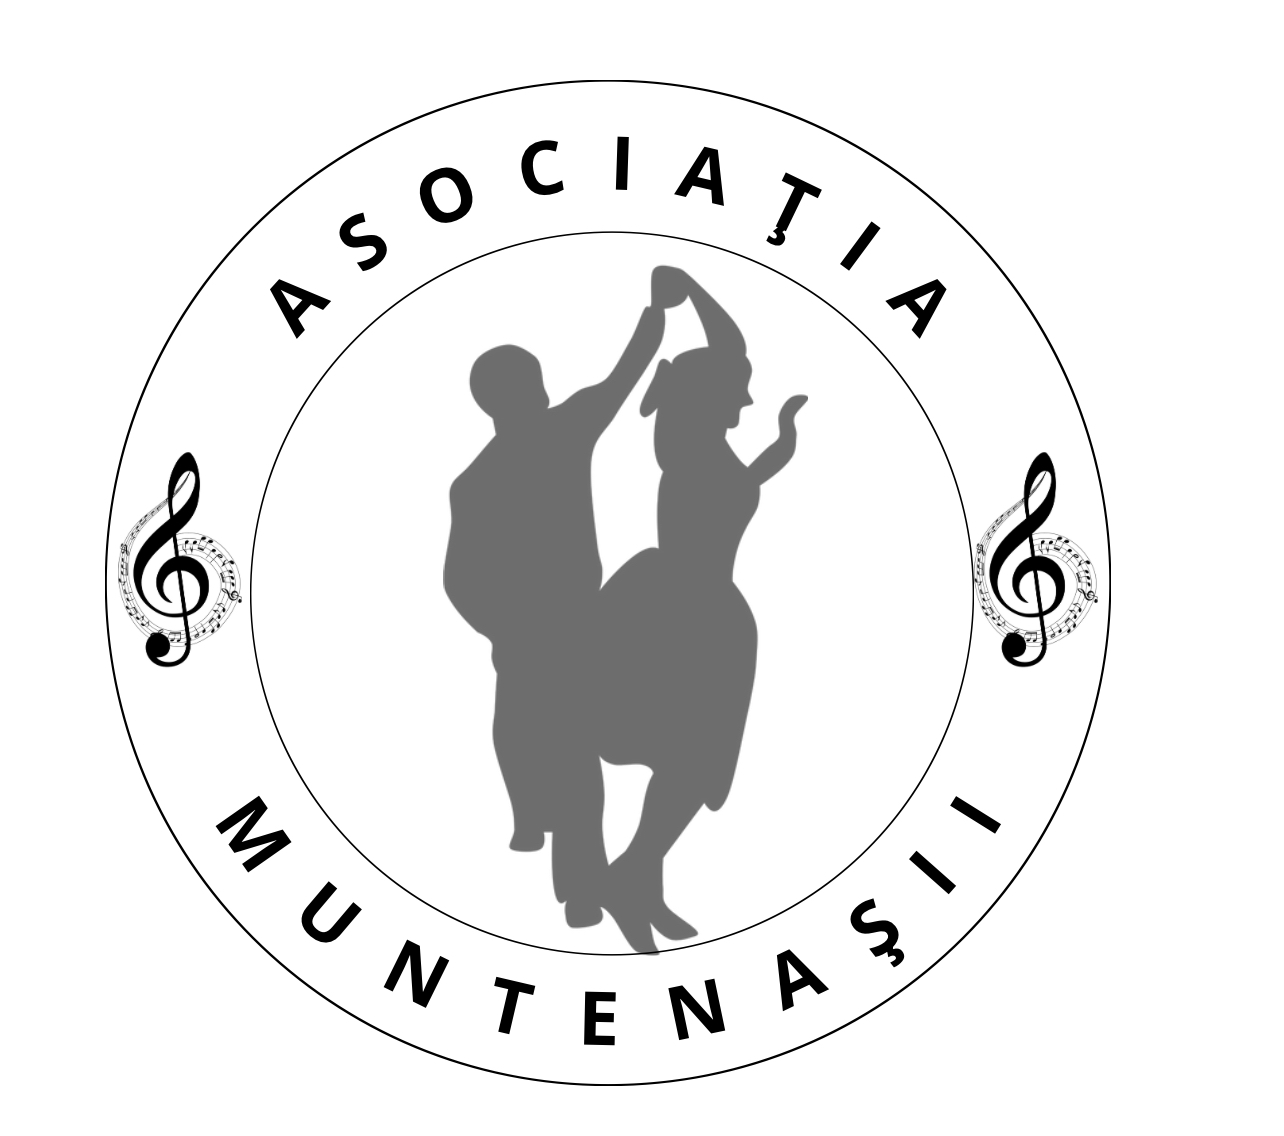 Muntenasii logo